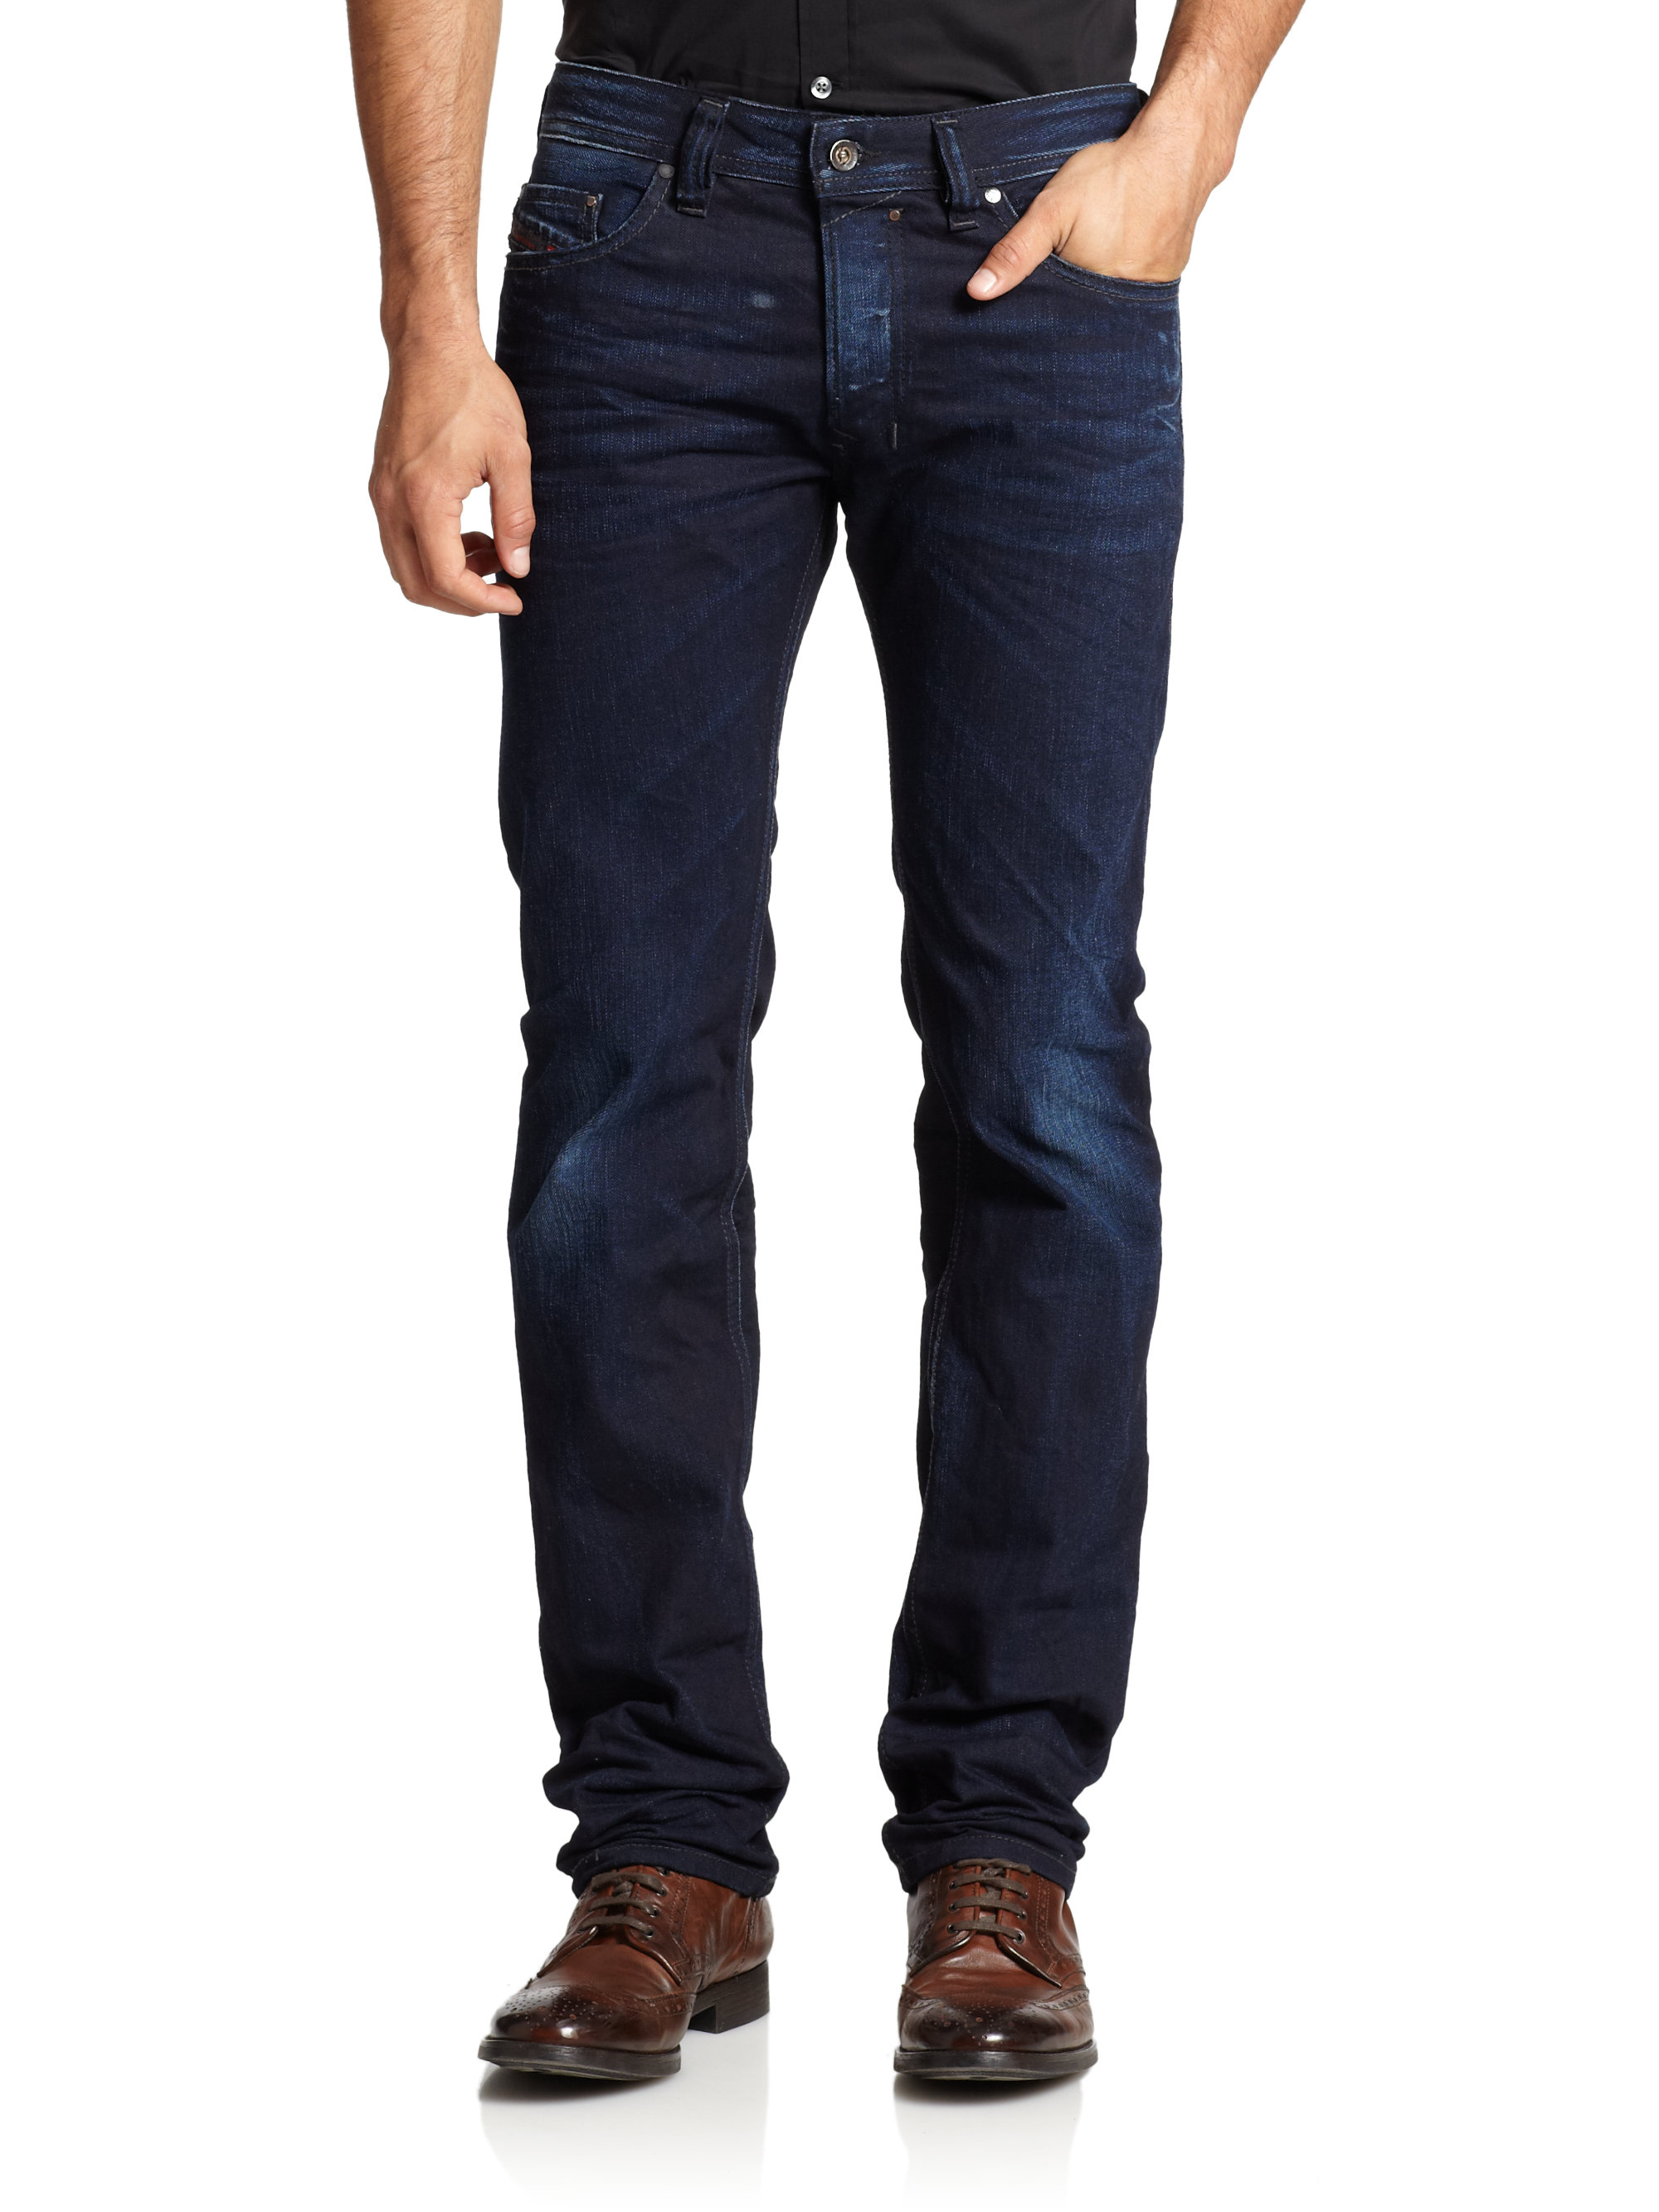 Lyst - Diesel Safado Dark Wash Straight-leg Jeans in Blue for Men